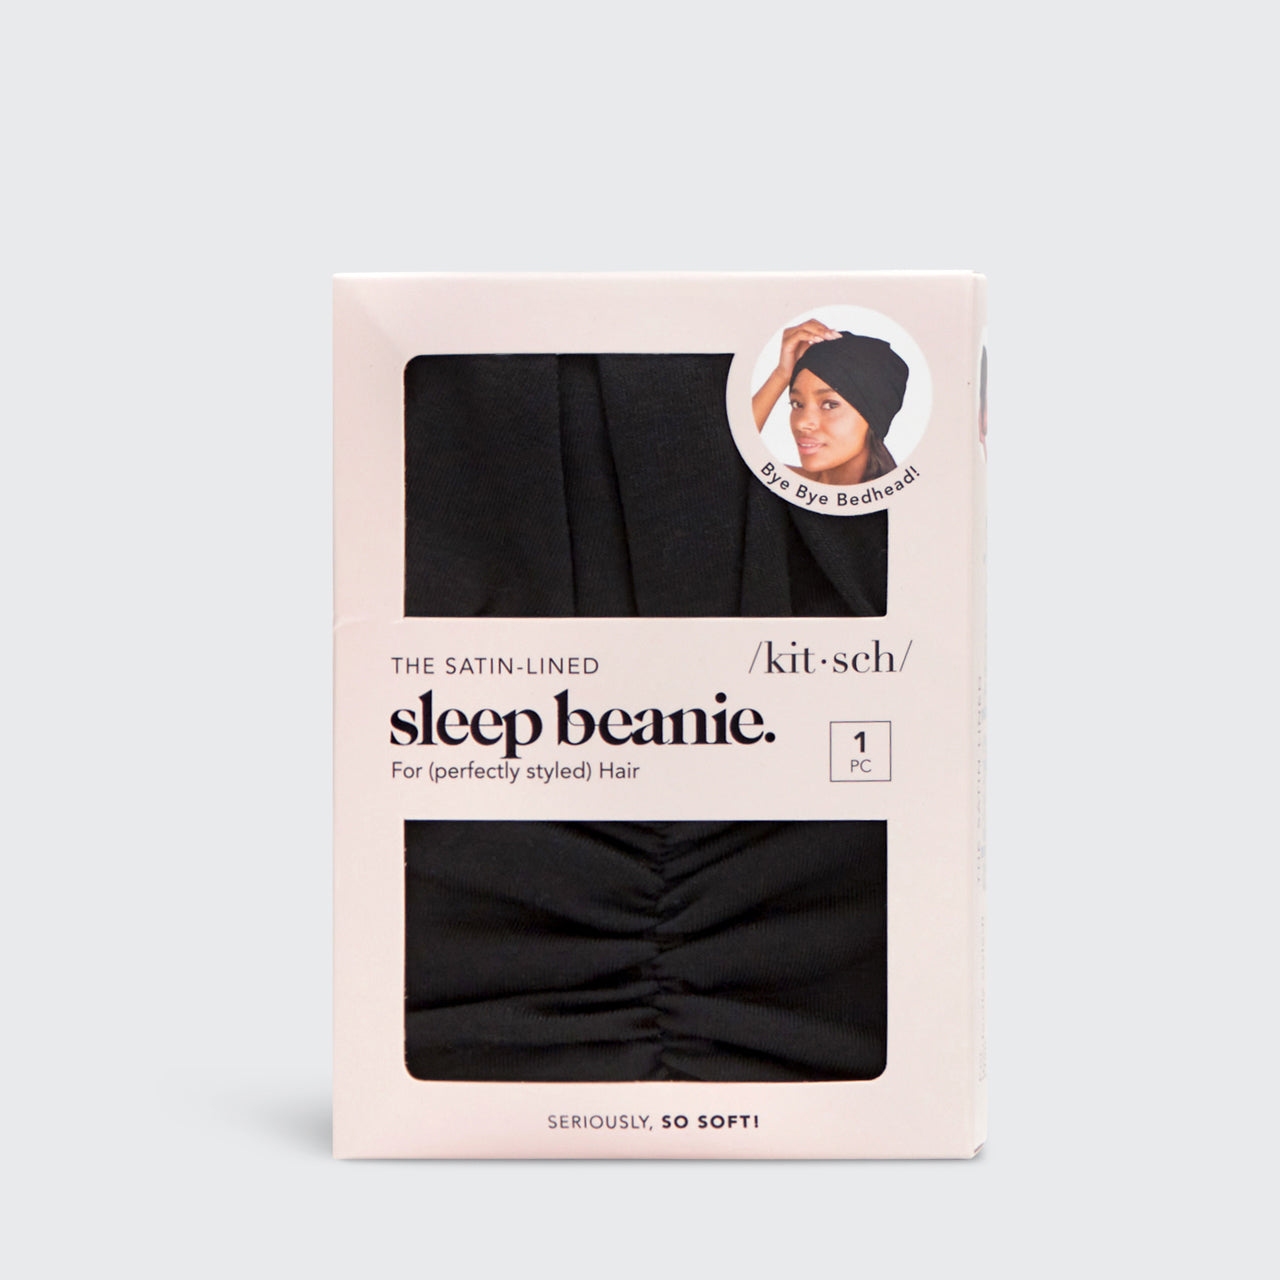 Sleep Turban/Beanie with Satin lining - Black